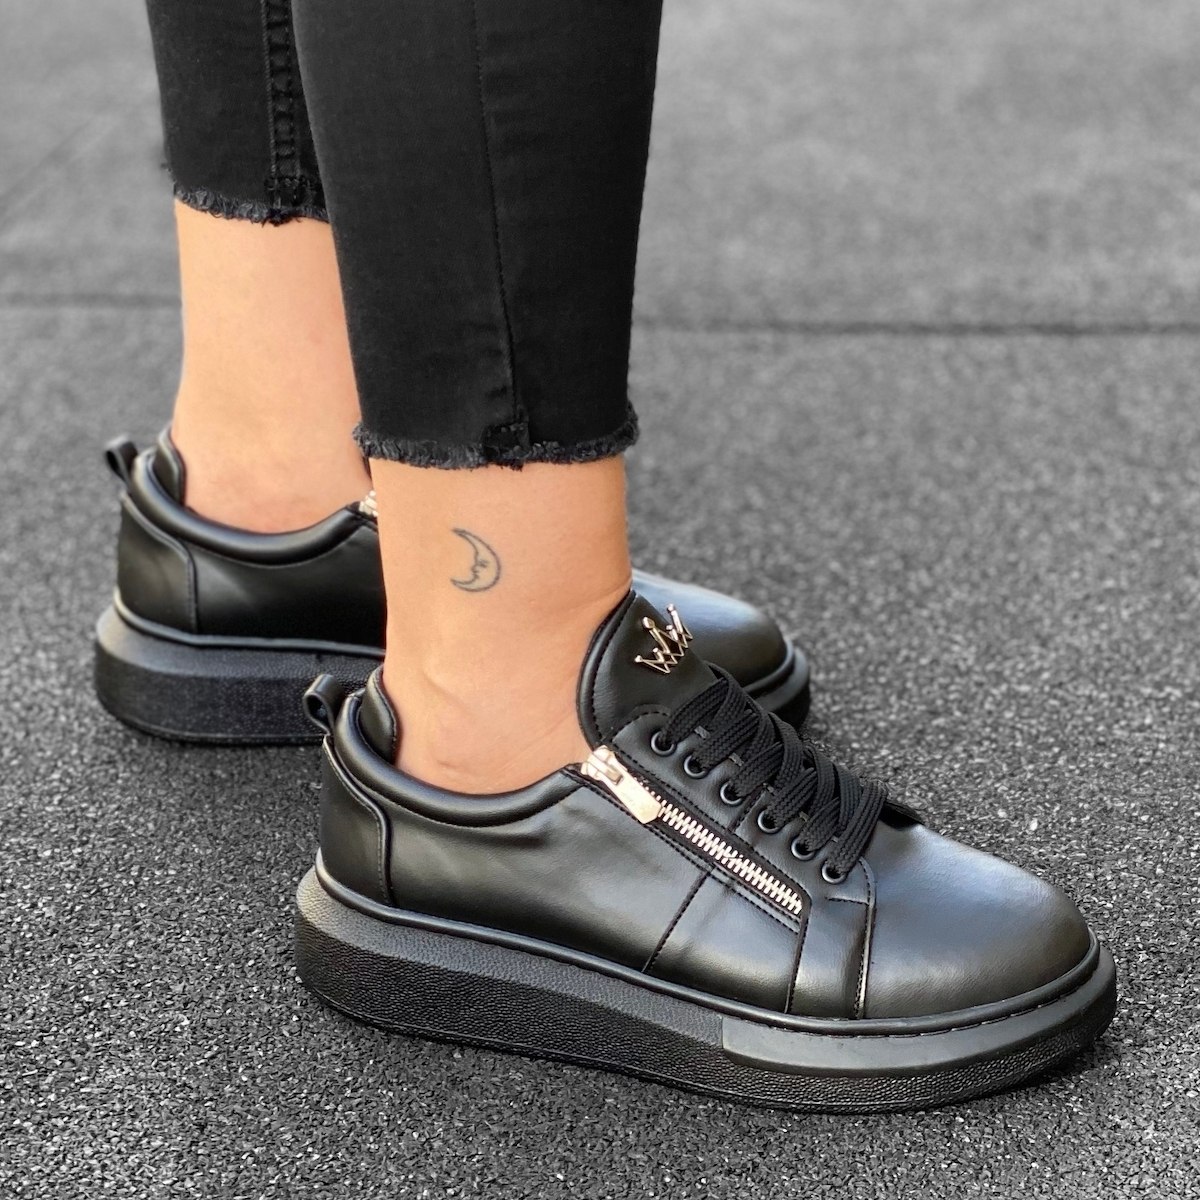 Woman Hype Sole Zipped Style Sneakers in Black - 1